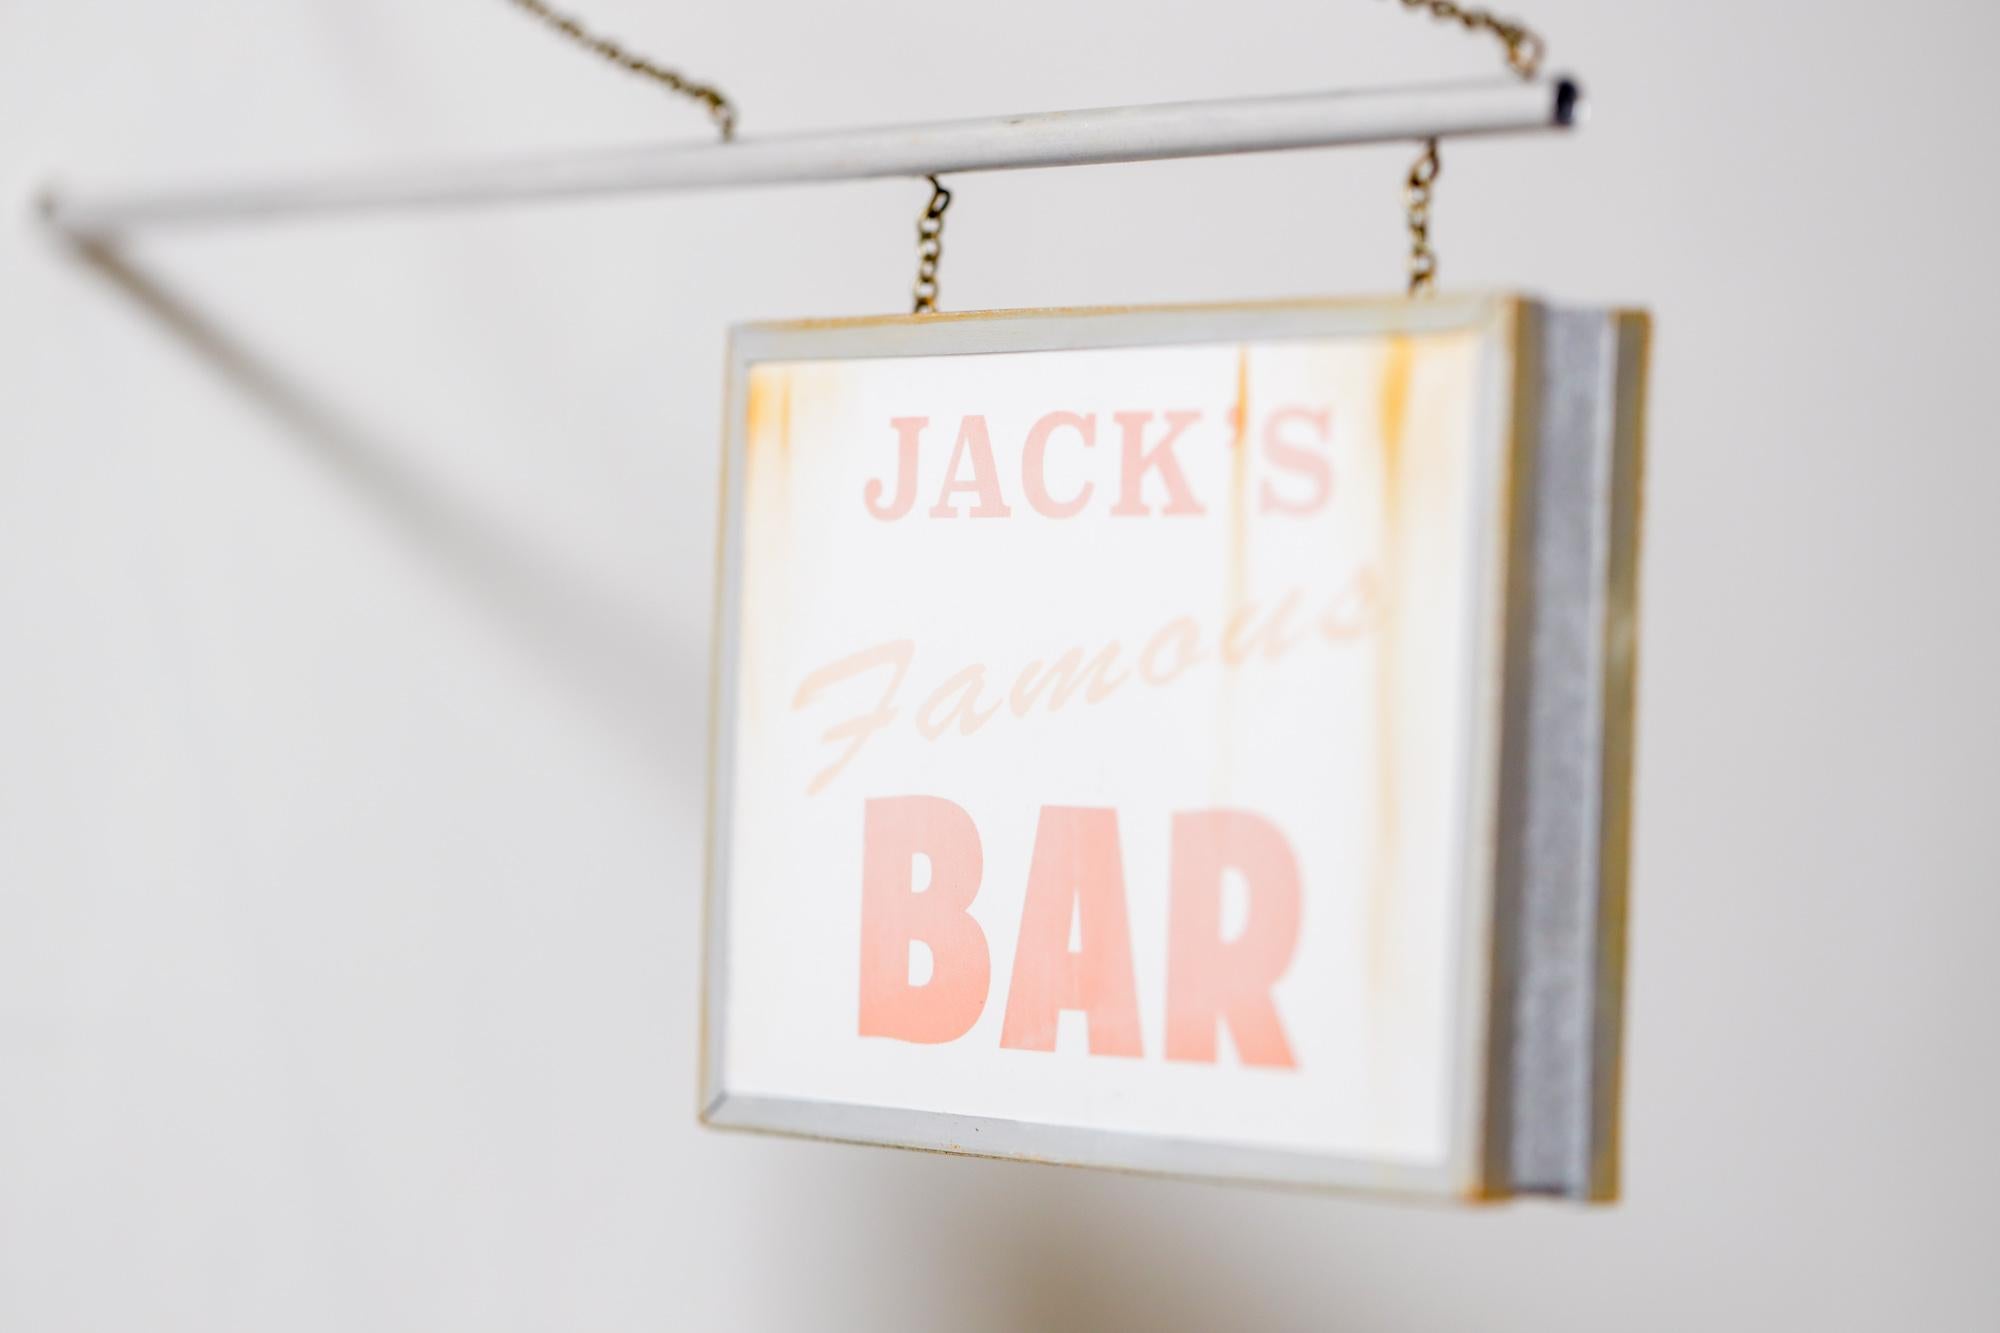 Jack's Famous Bar - Contemporary Sculpture by Drew Leshko